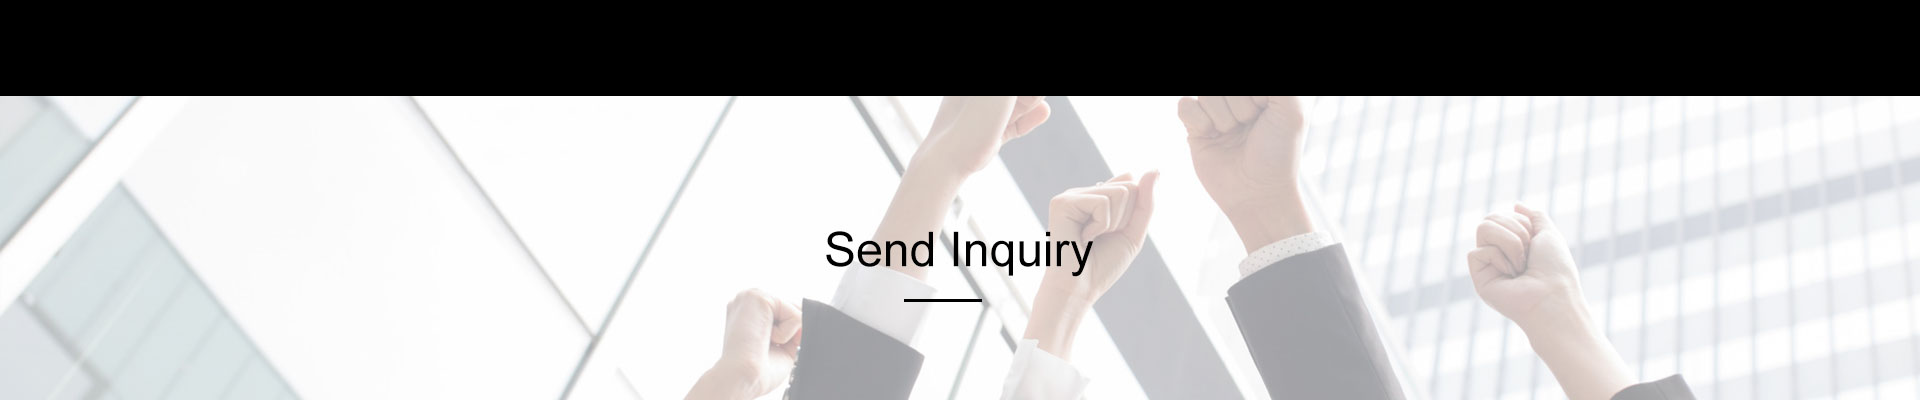 Send Inquiry